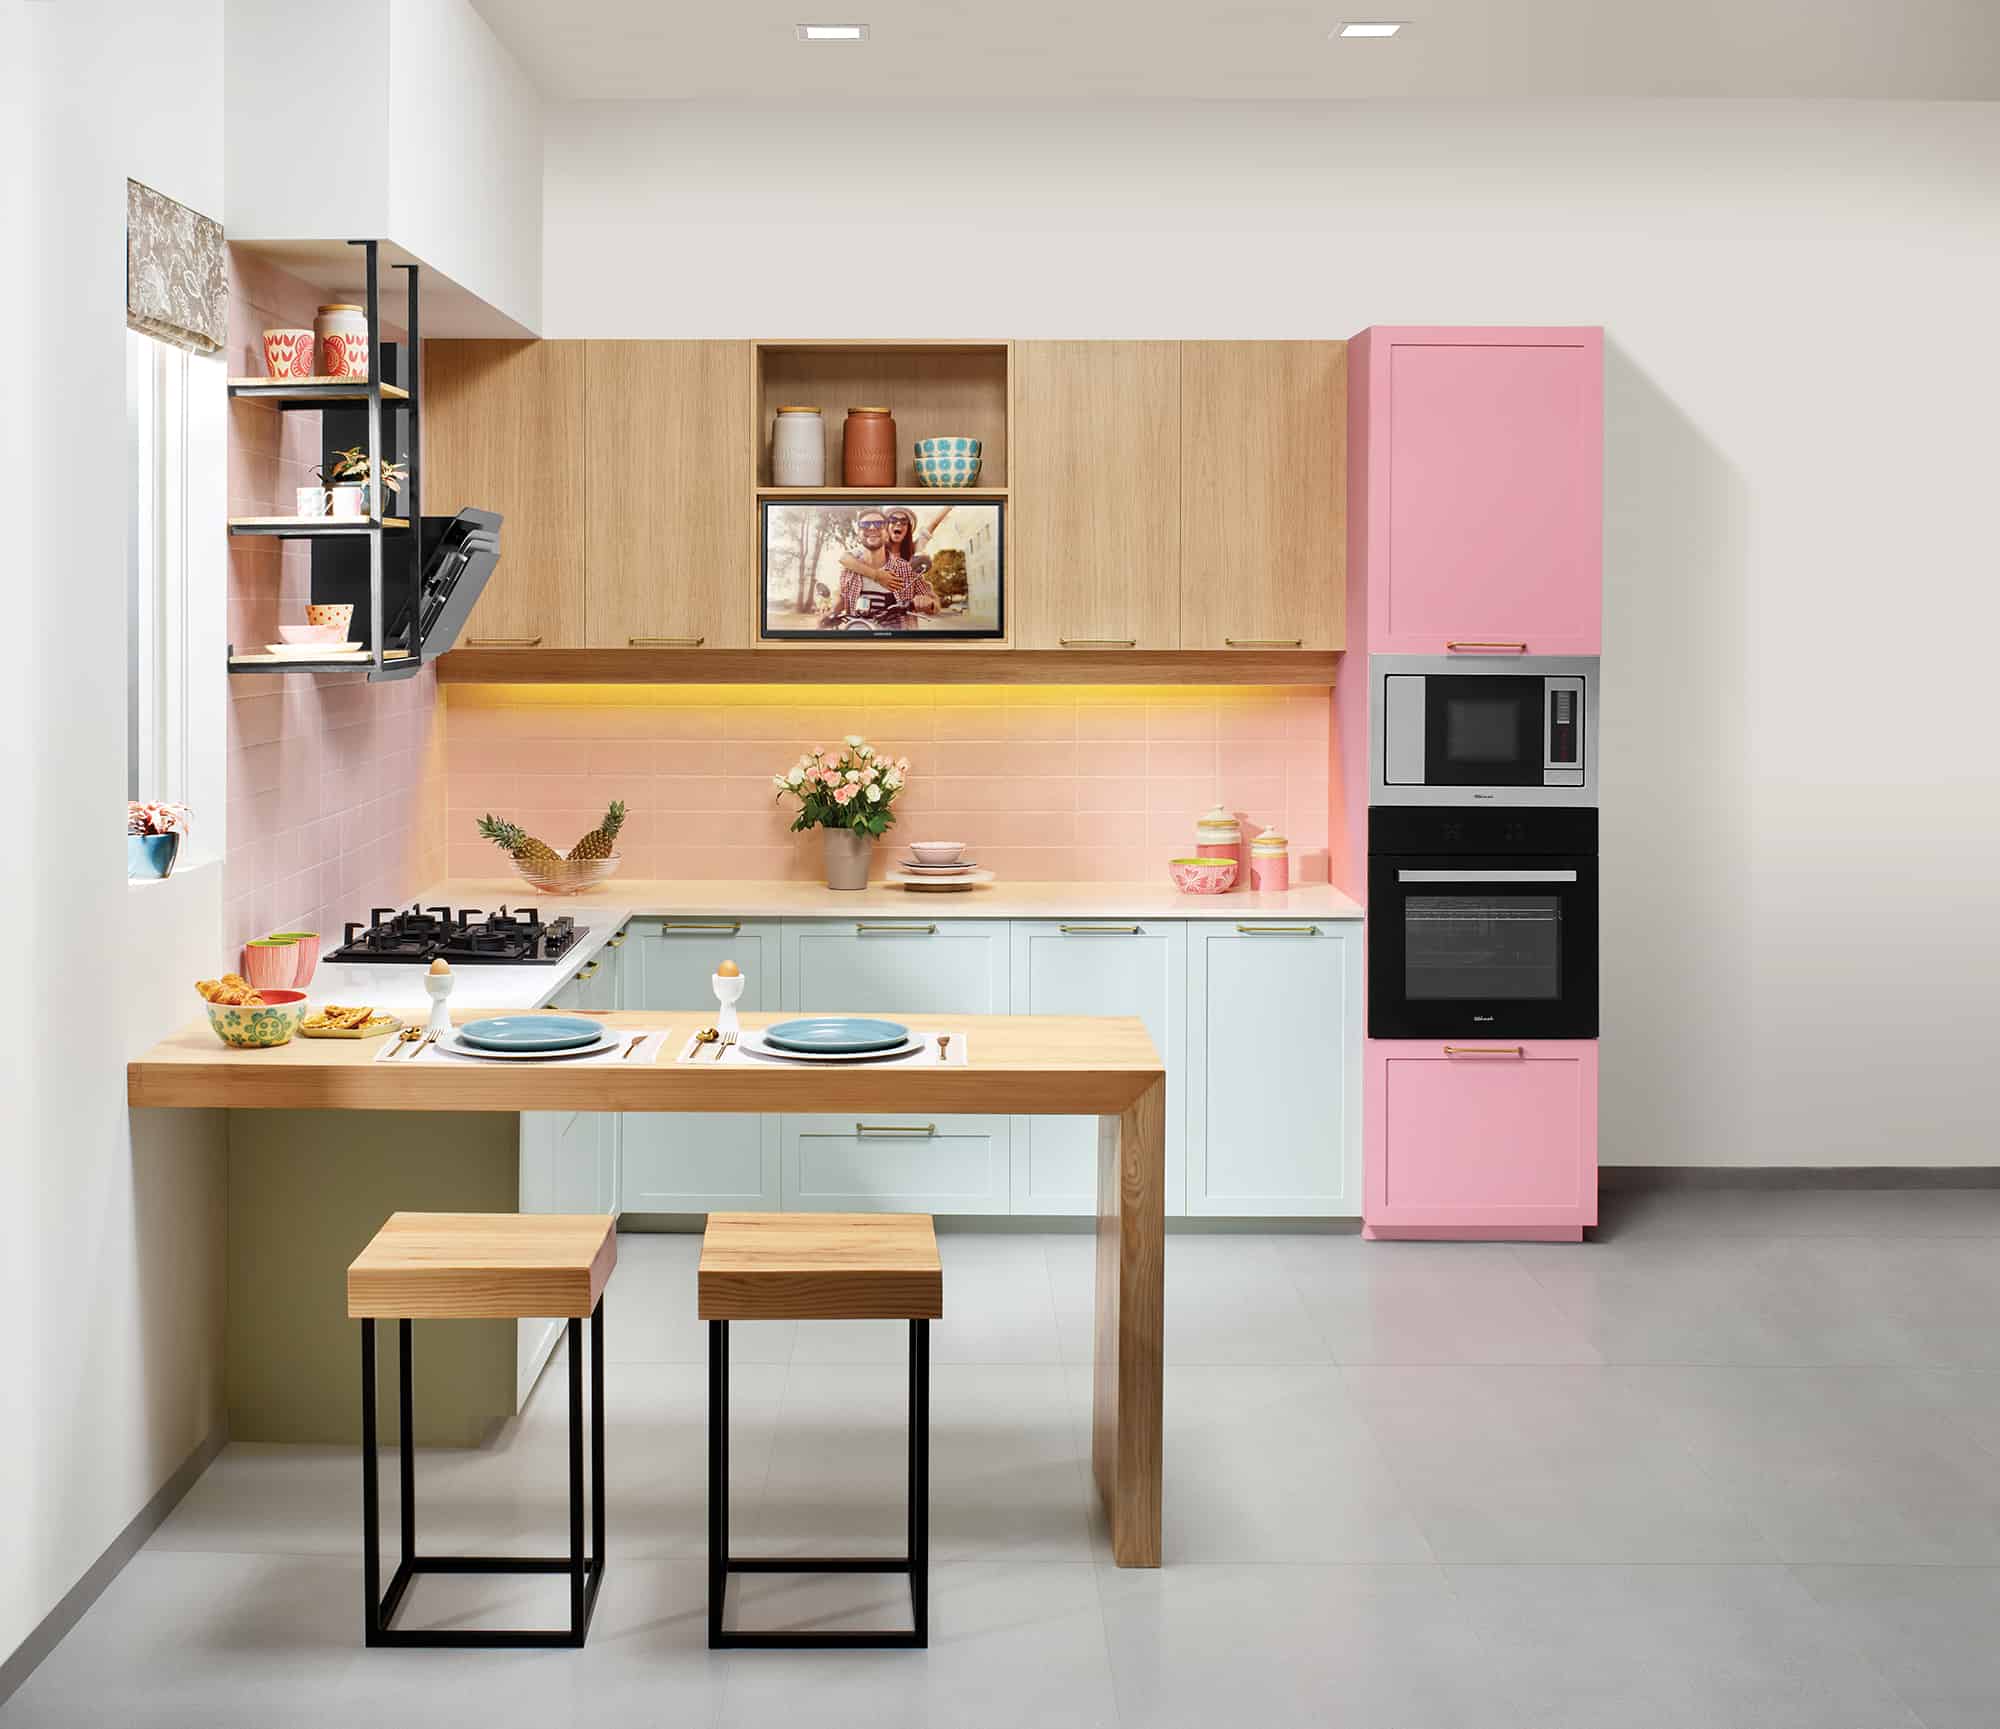 Kitchen setup by Sleek modular kitchen in color variant pink and blue